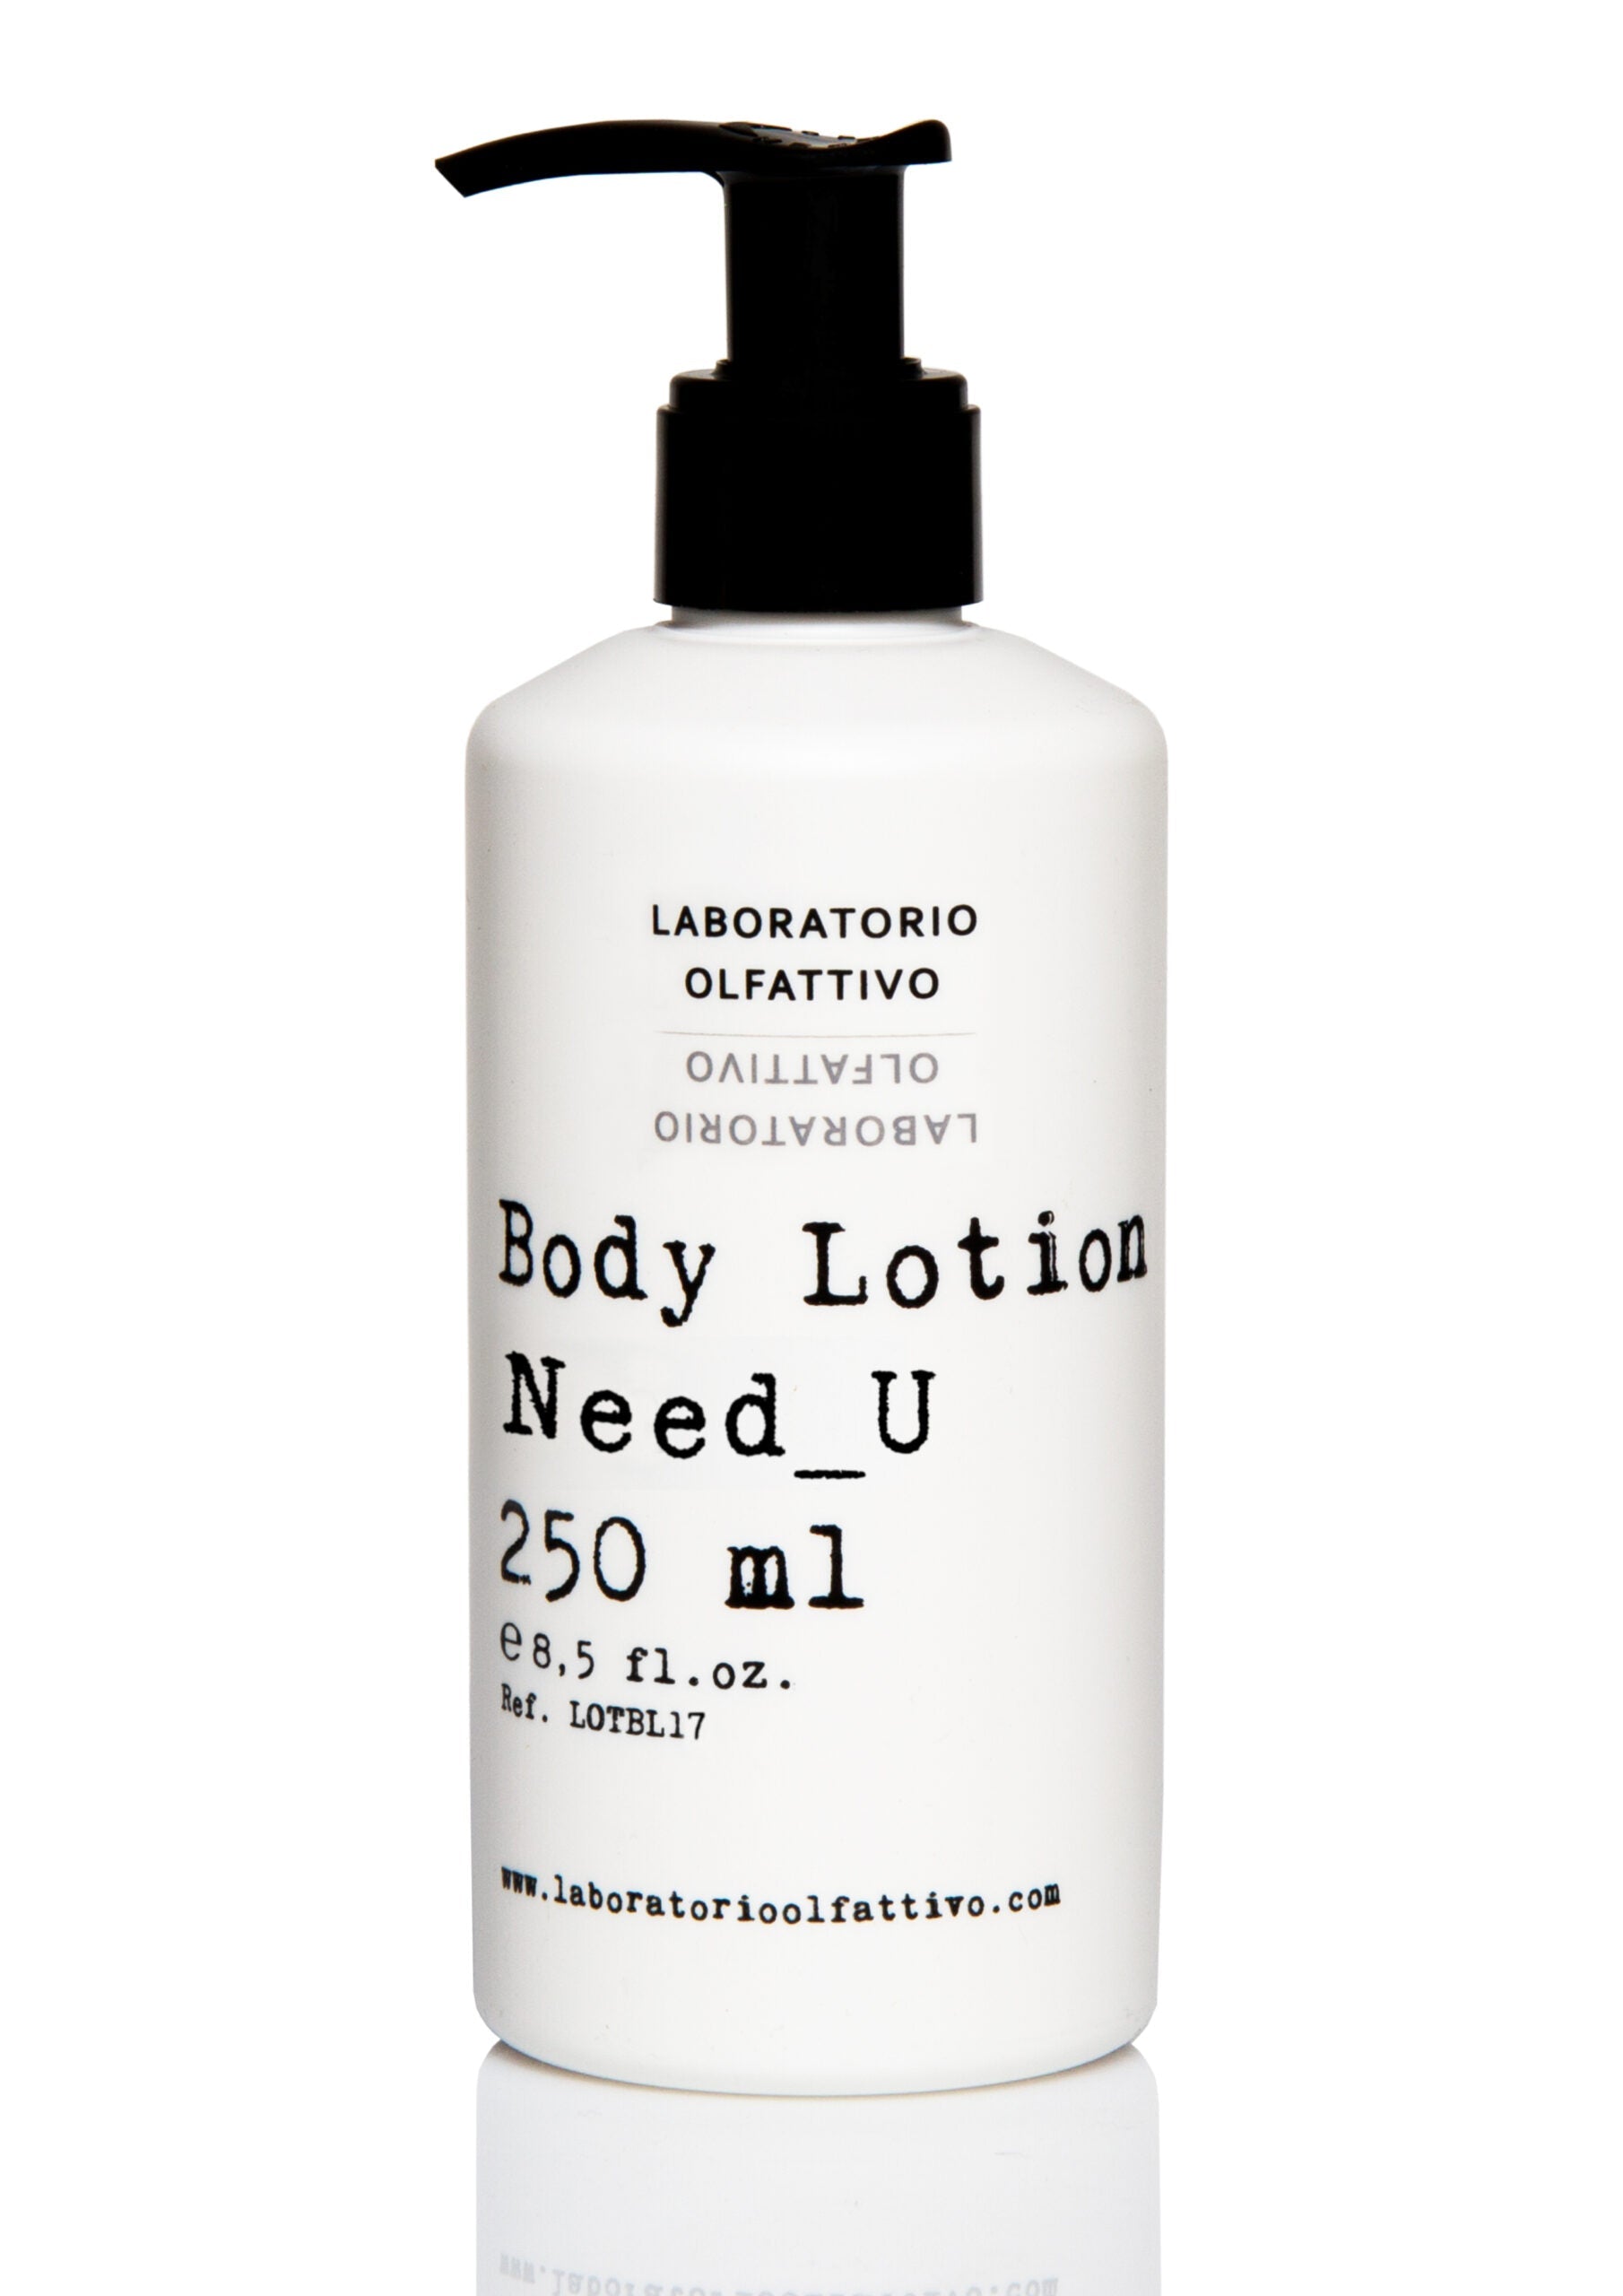 Laboratorio Olfattivo Need_U Body Lotion